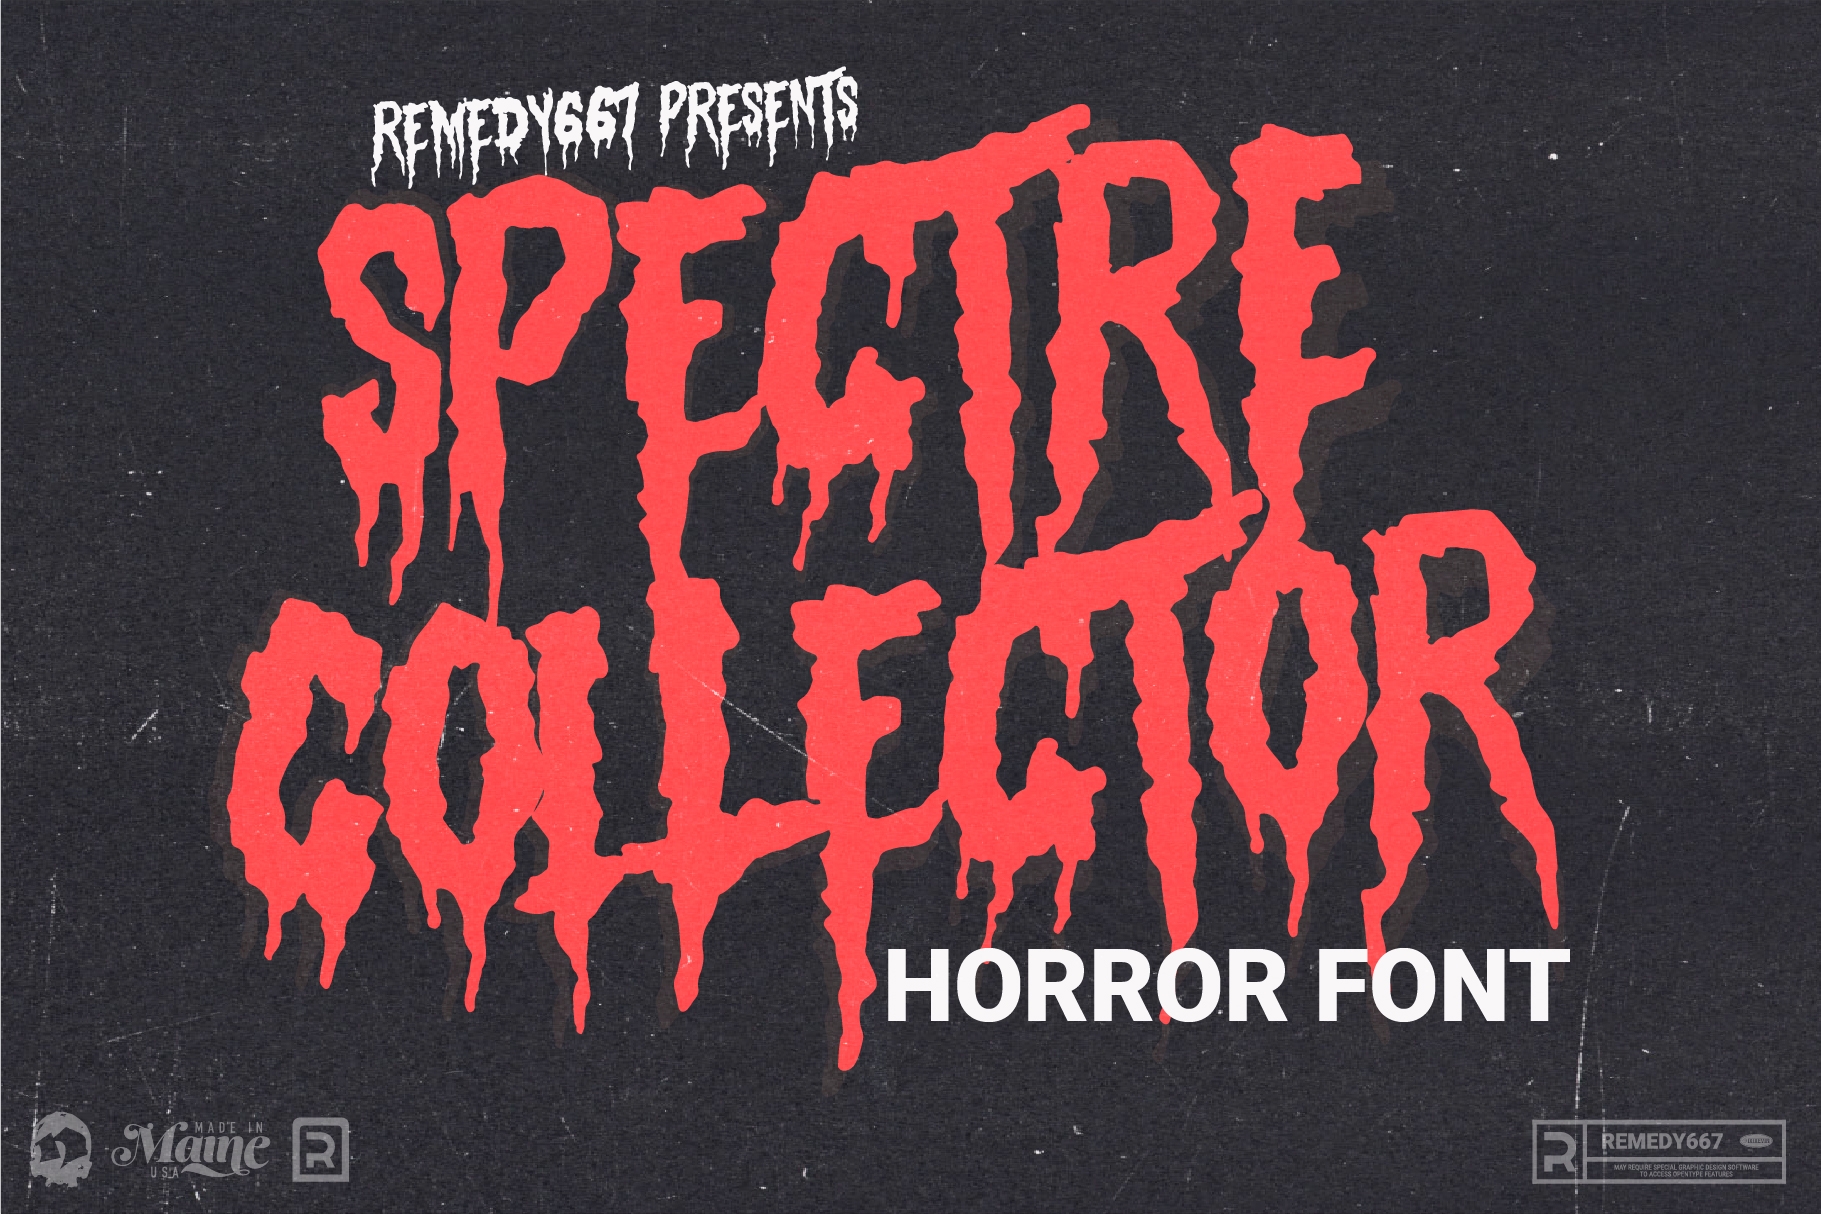 Remedy667 Spectre Collector Creepy Horror Font